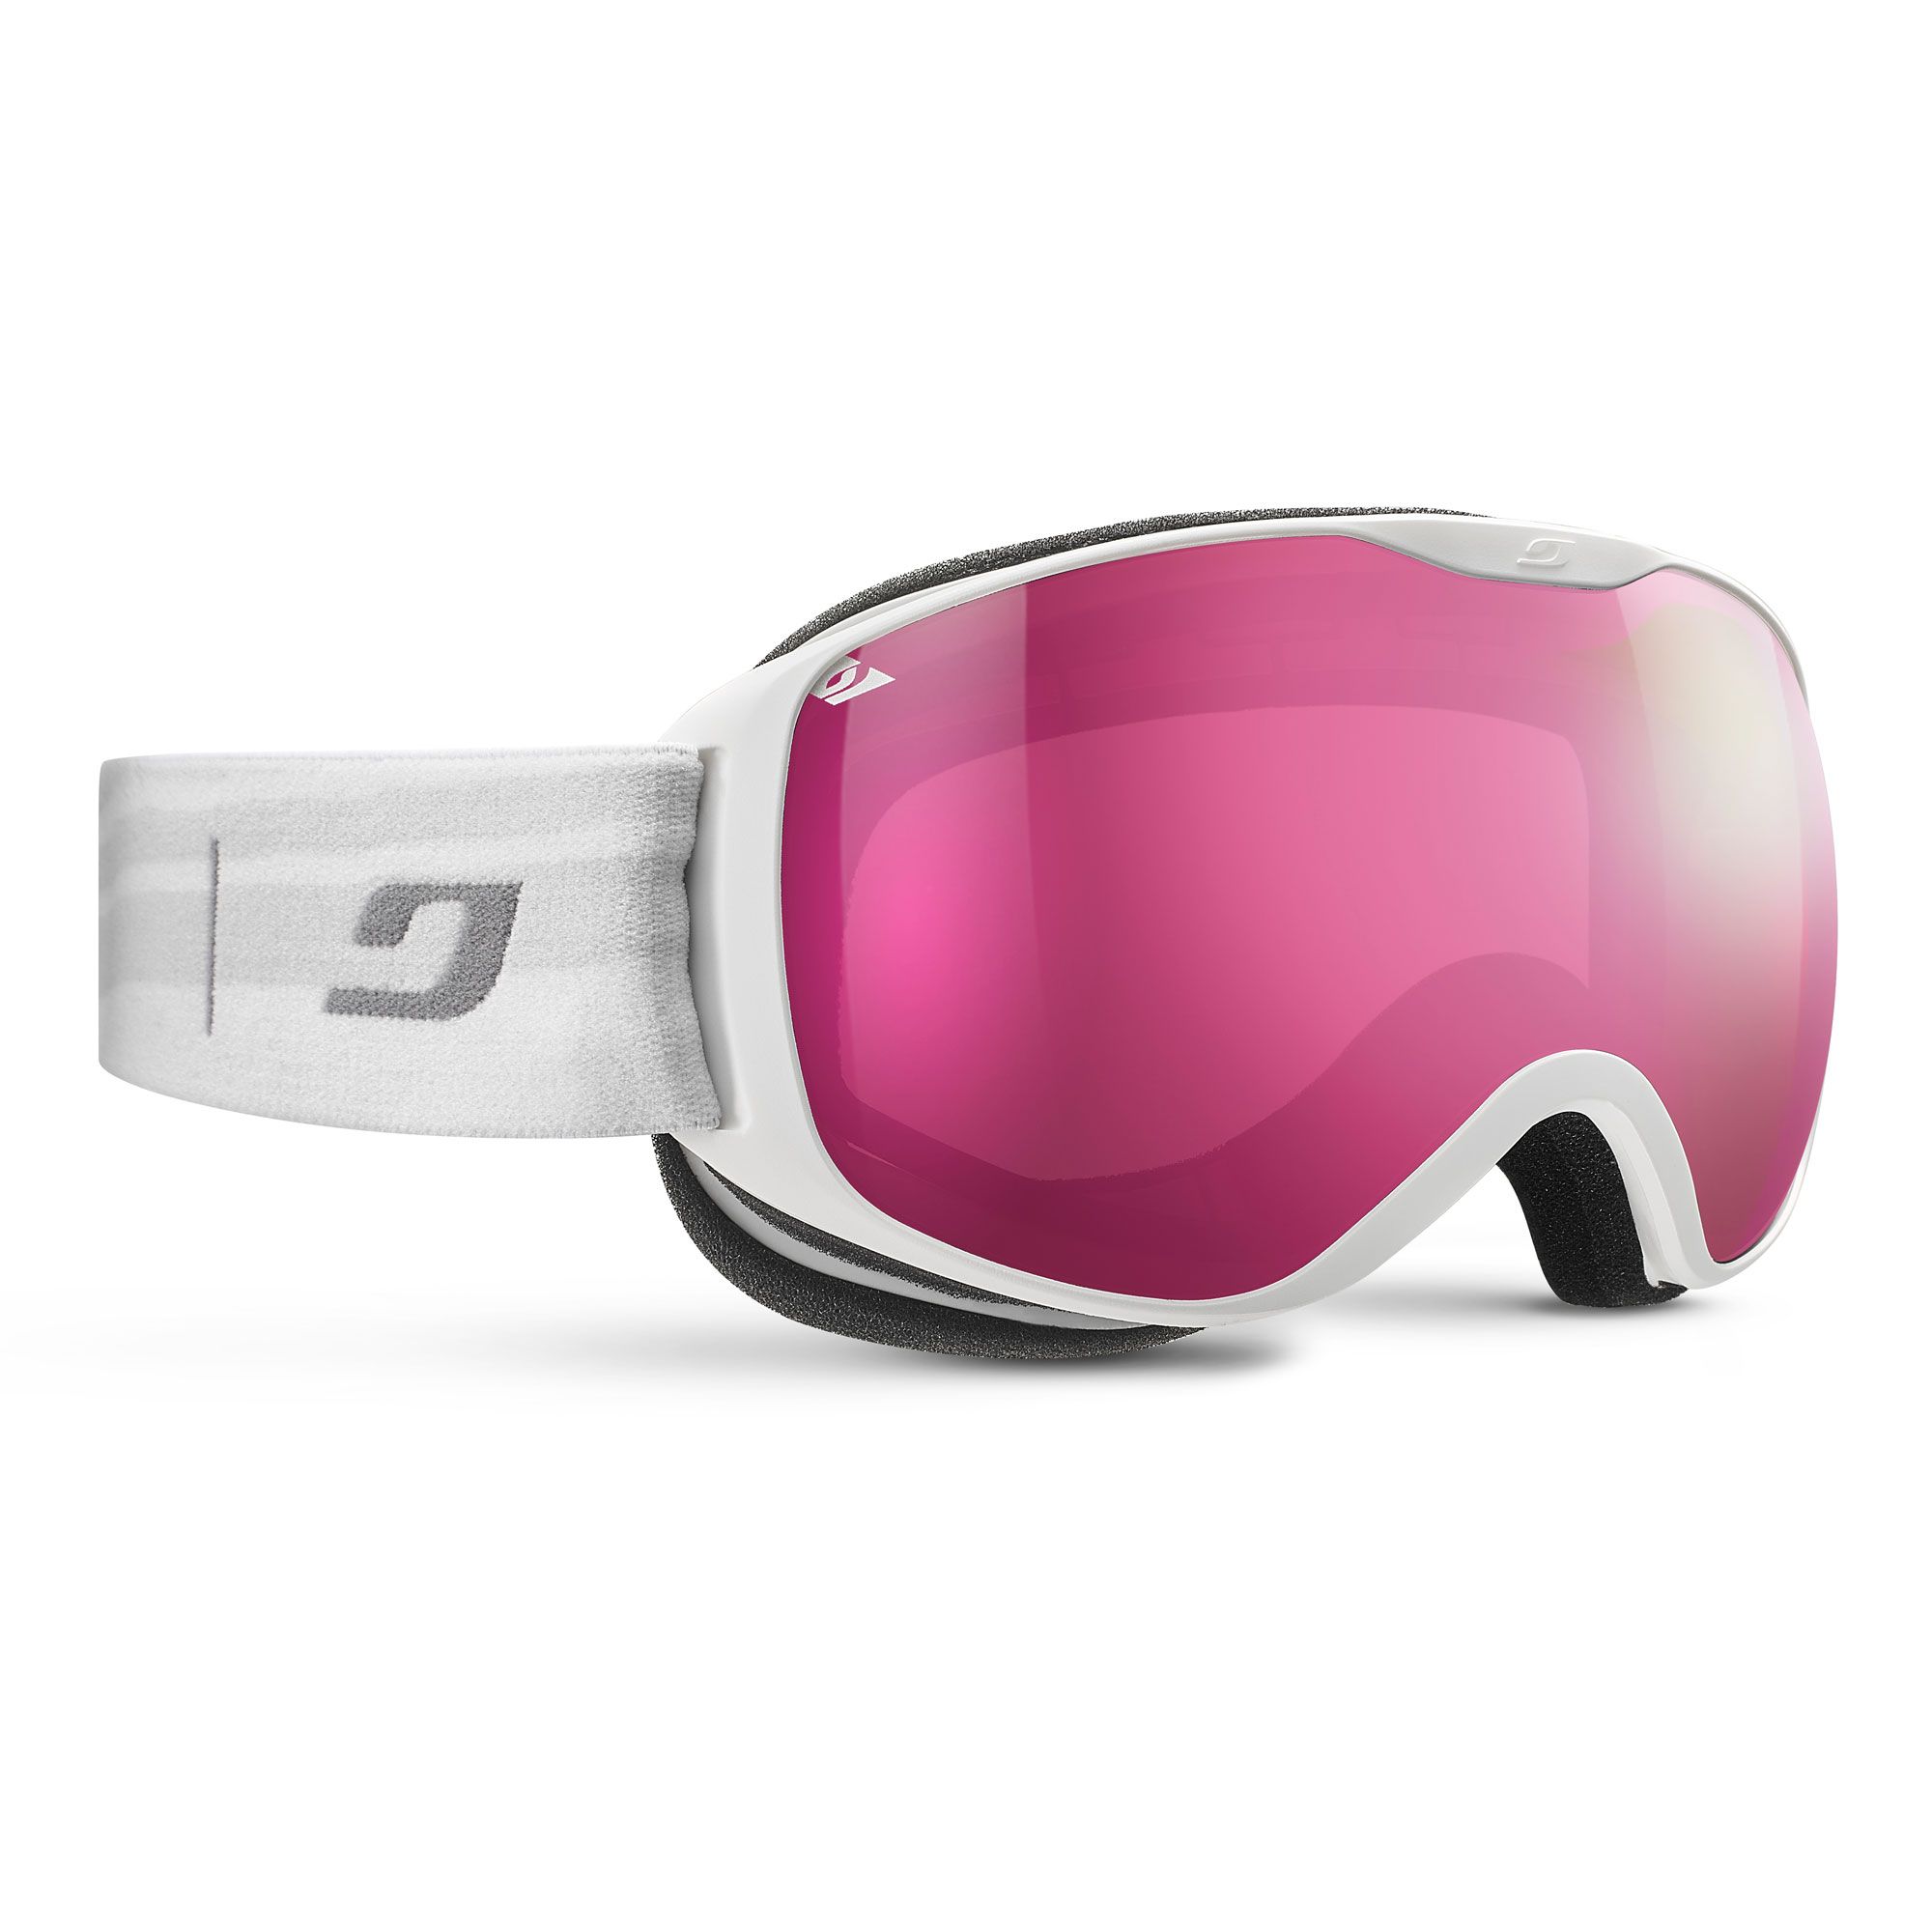 Masque de Ski Pioneer - Blanc - Spectron 3